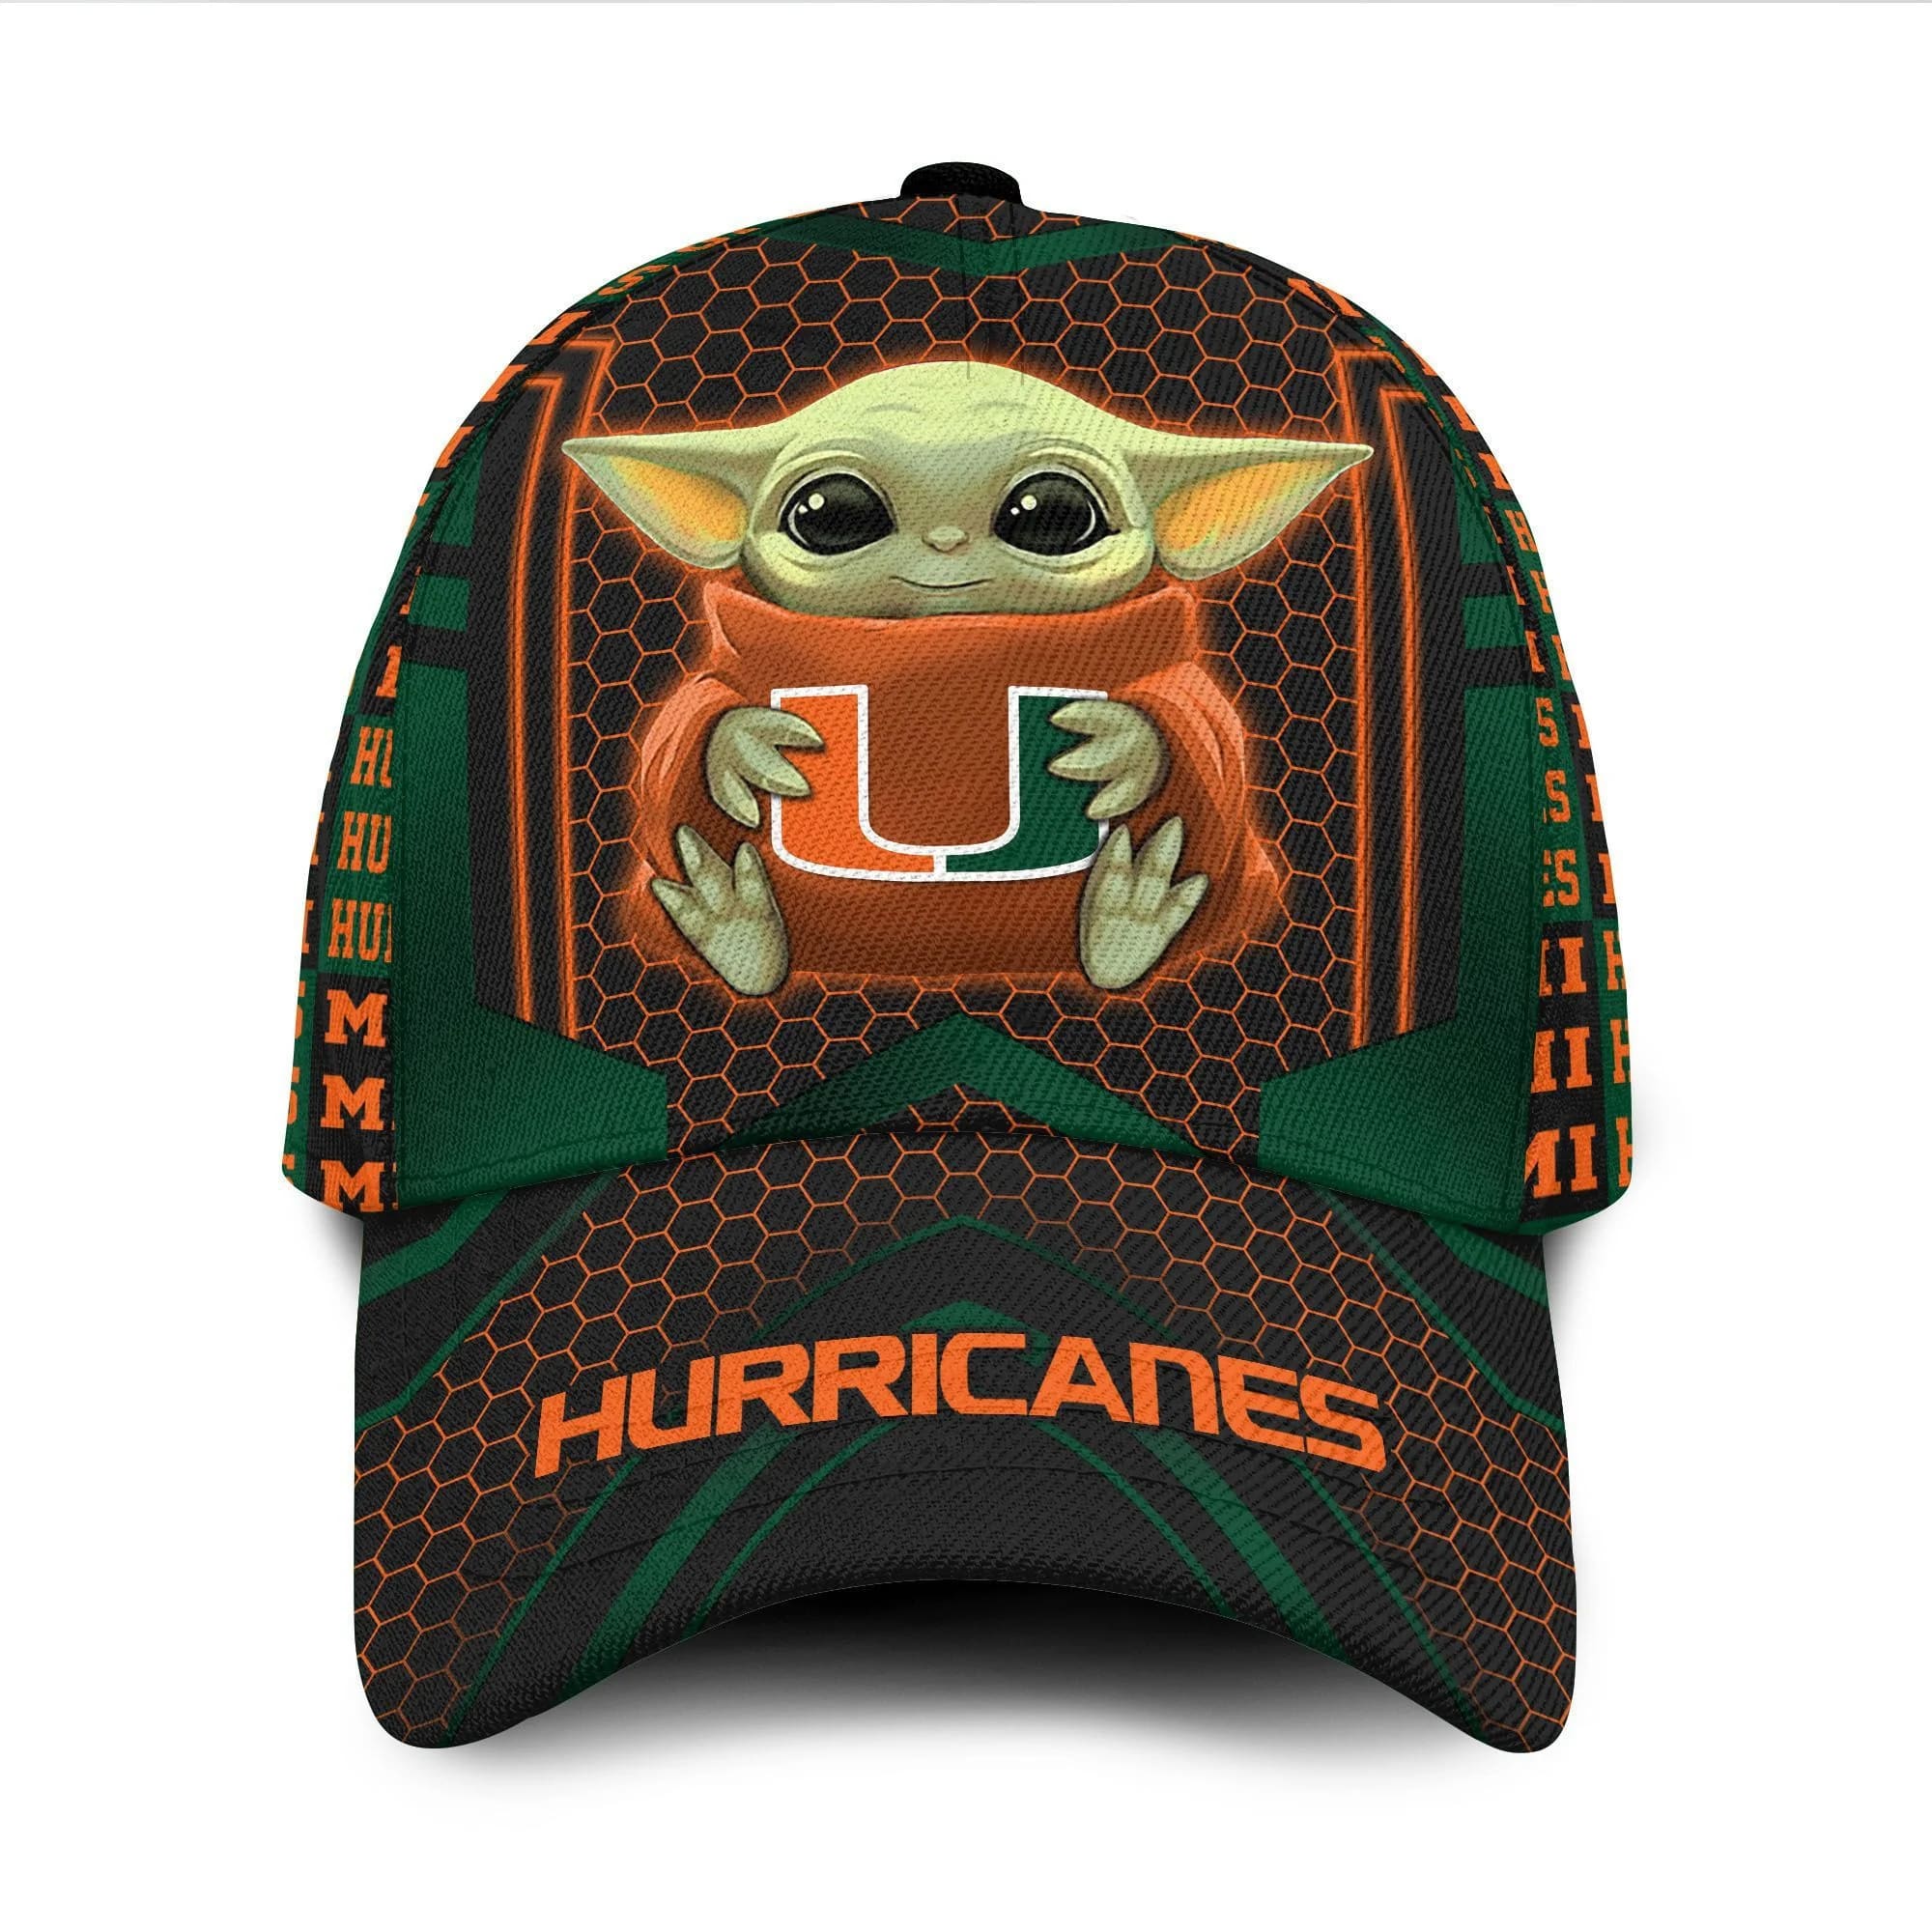 Miami Hurricanes Baby Yoda All Over Print 3D Baseball Cap P7pcz2